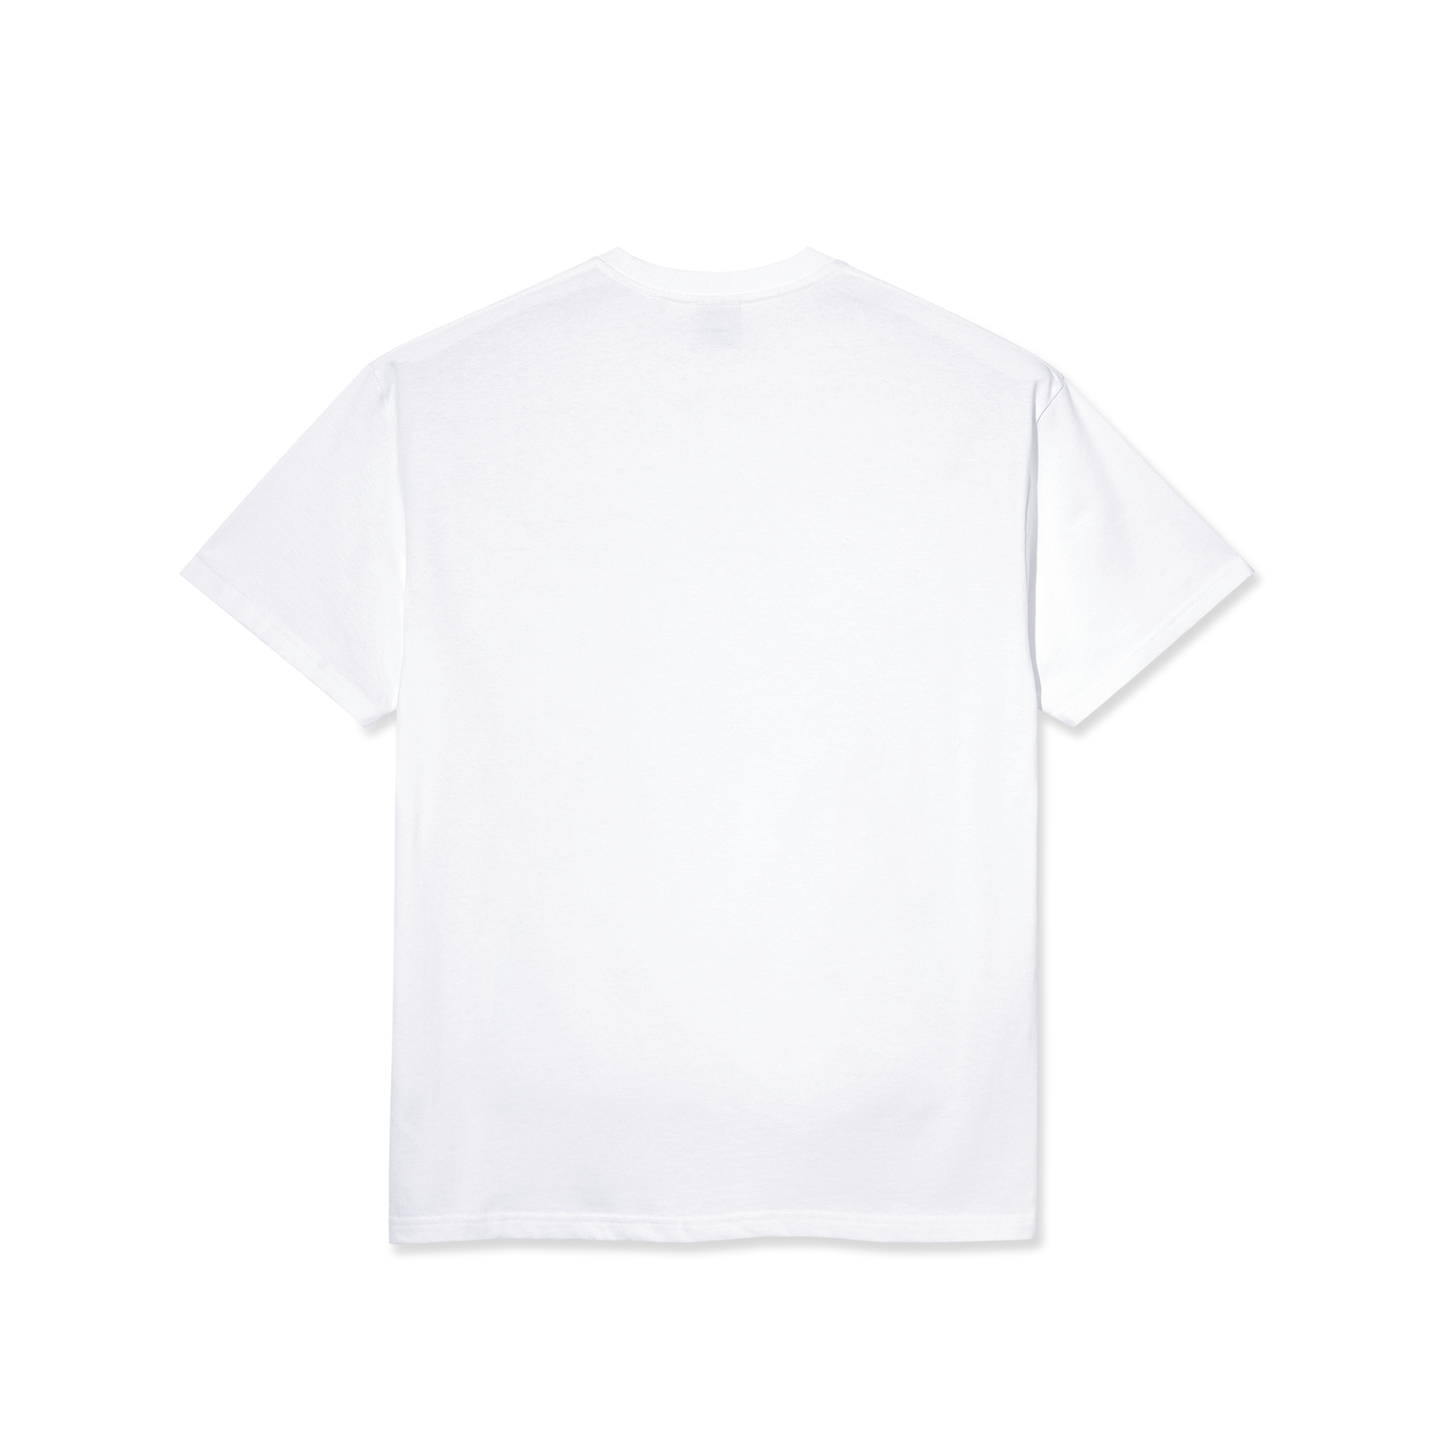 Polar Team T-Shirt White